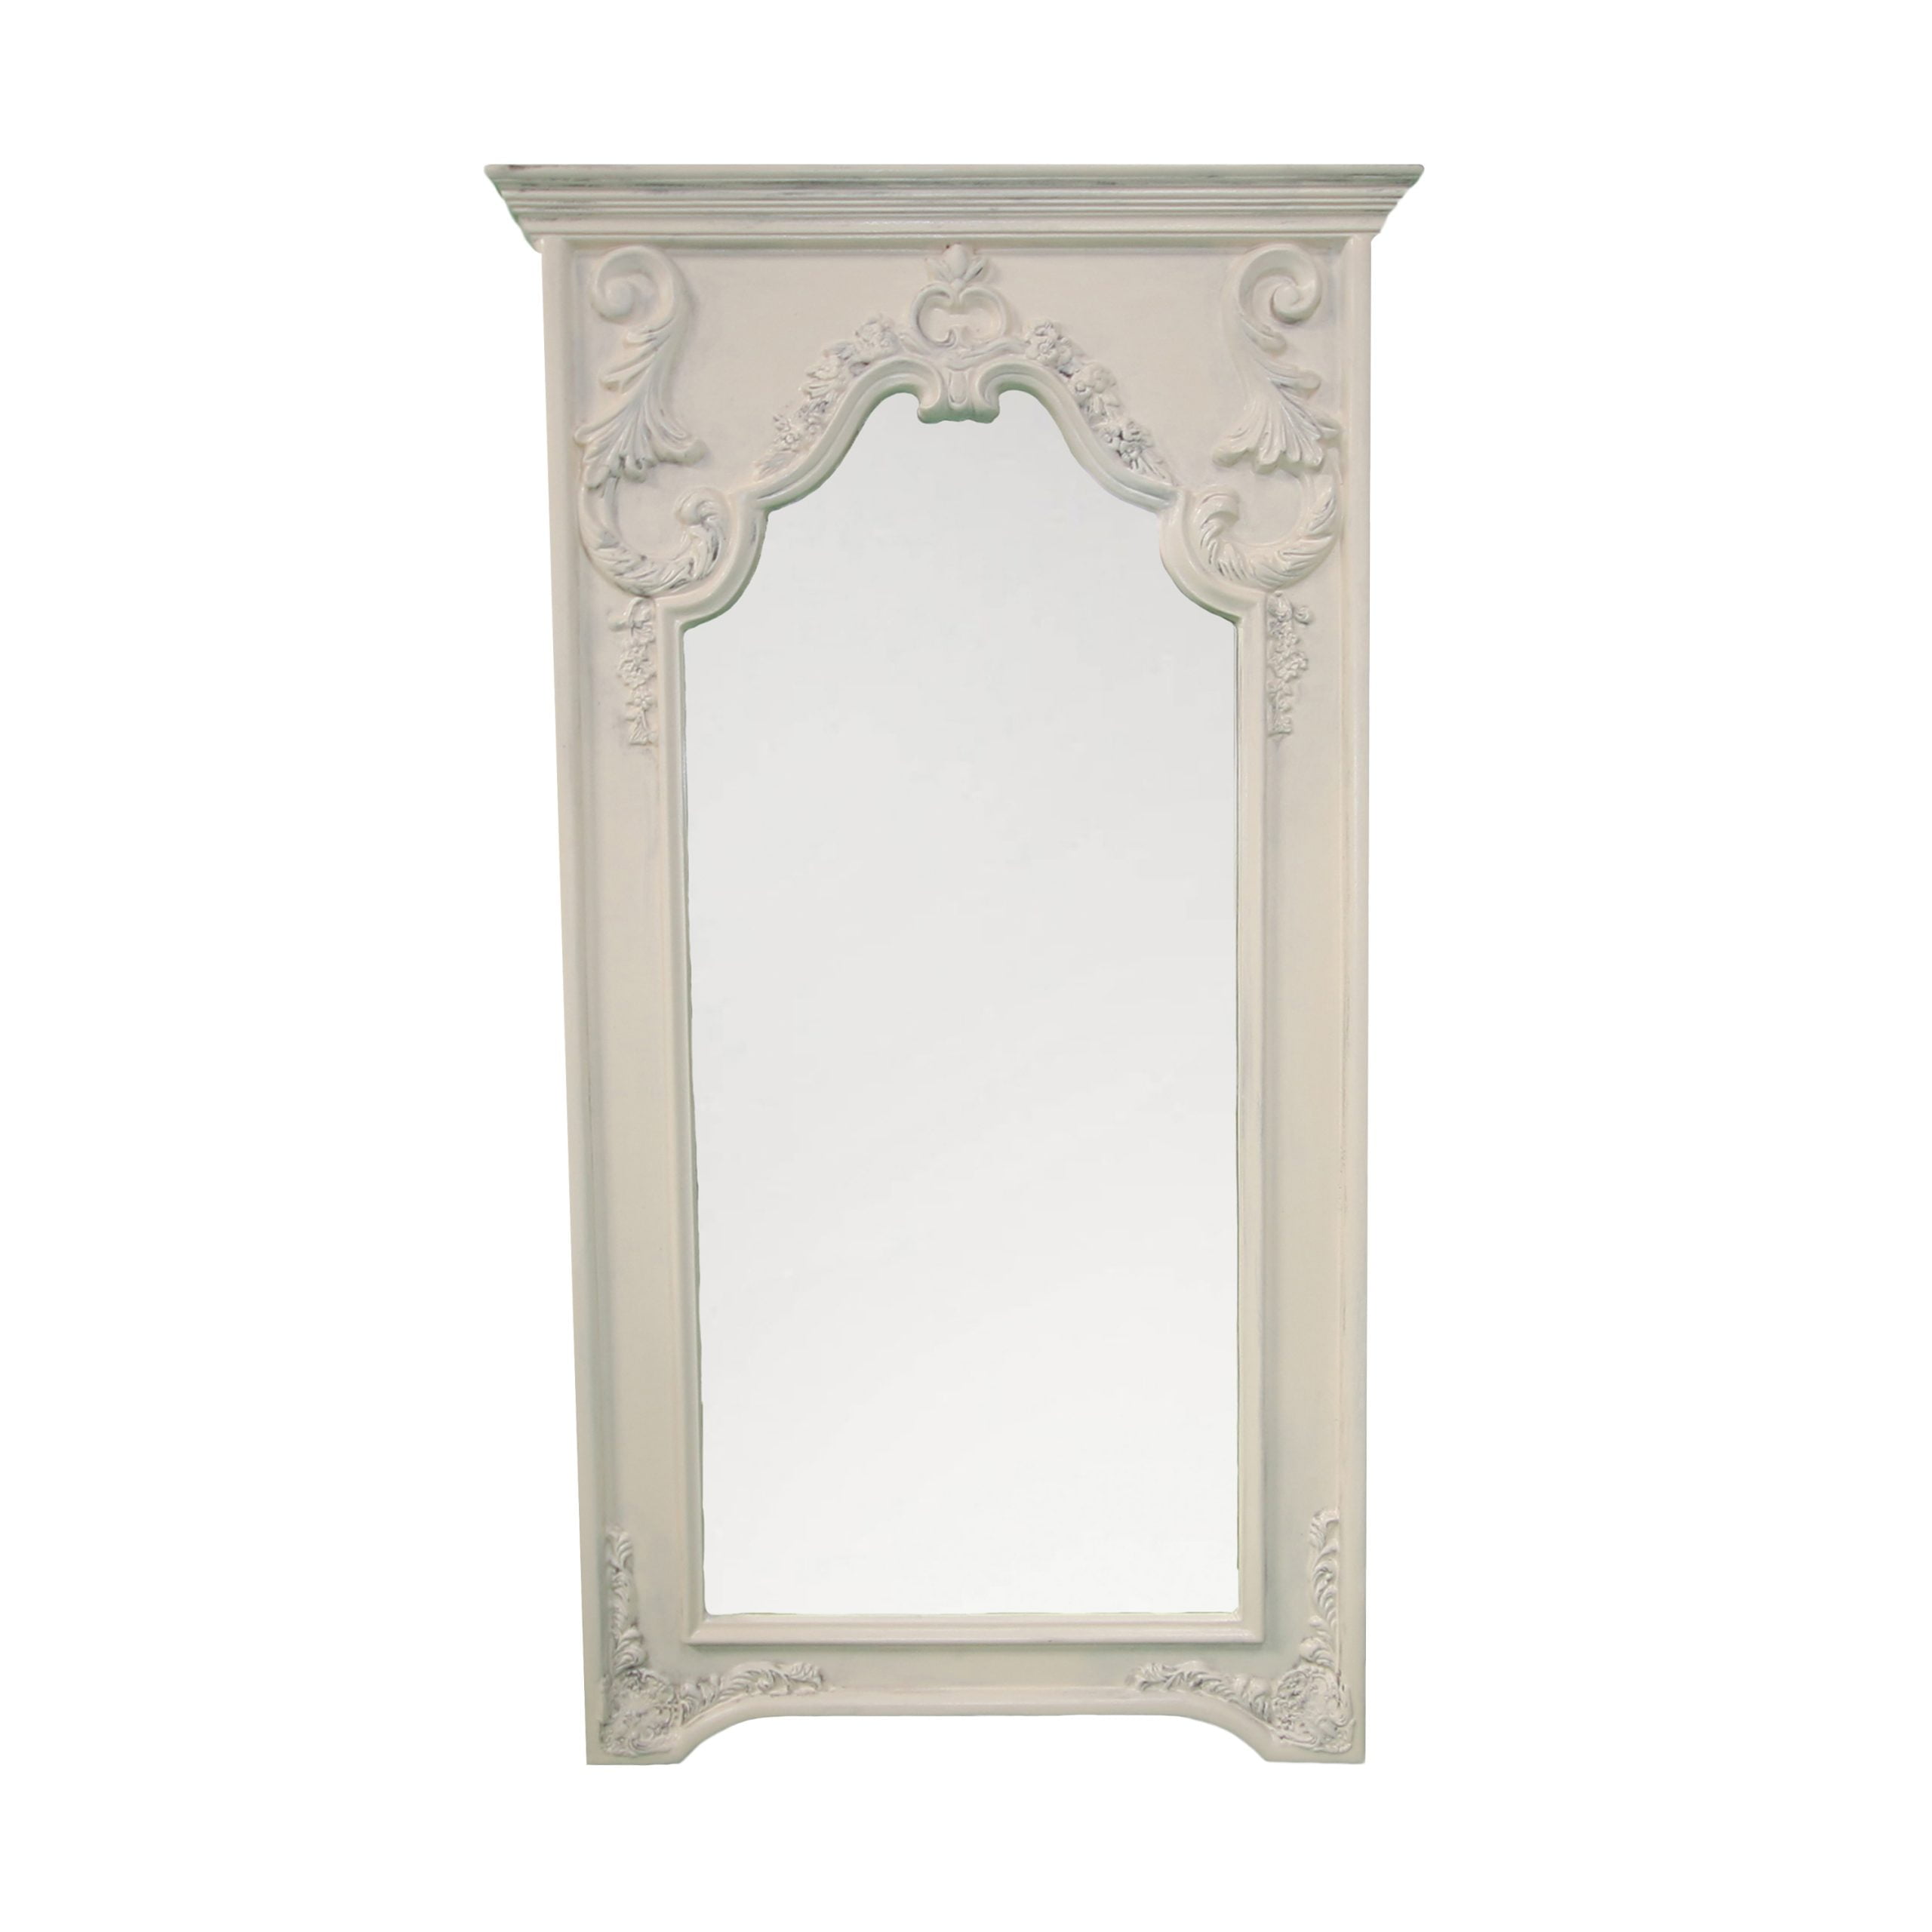 White standing mirror